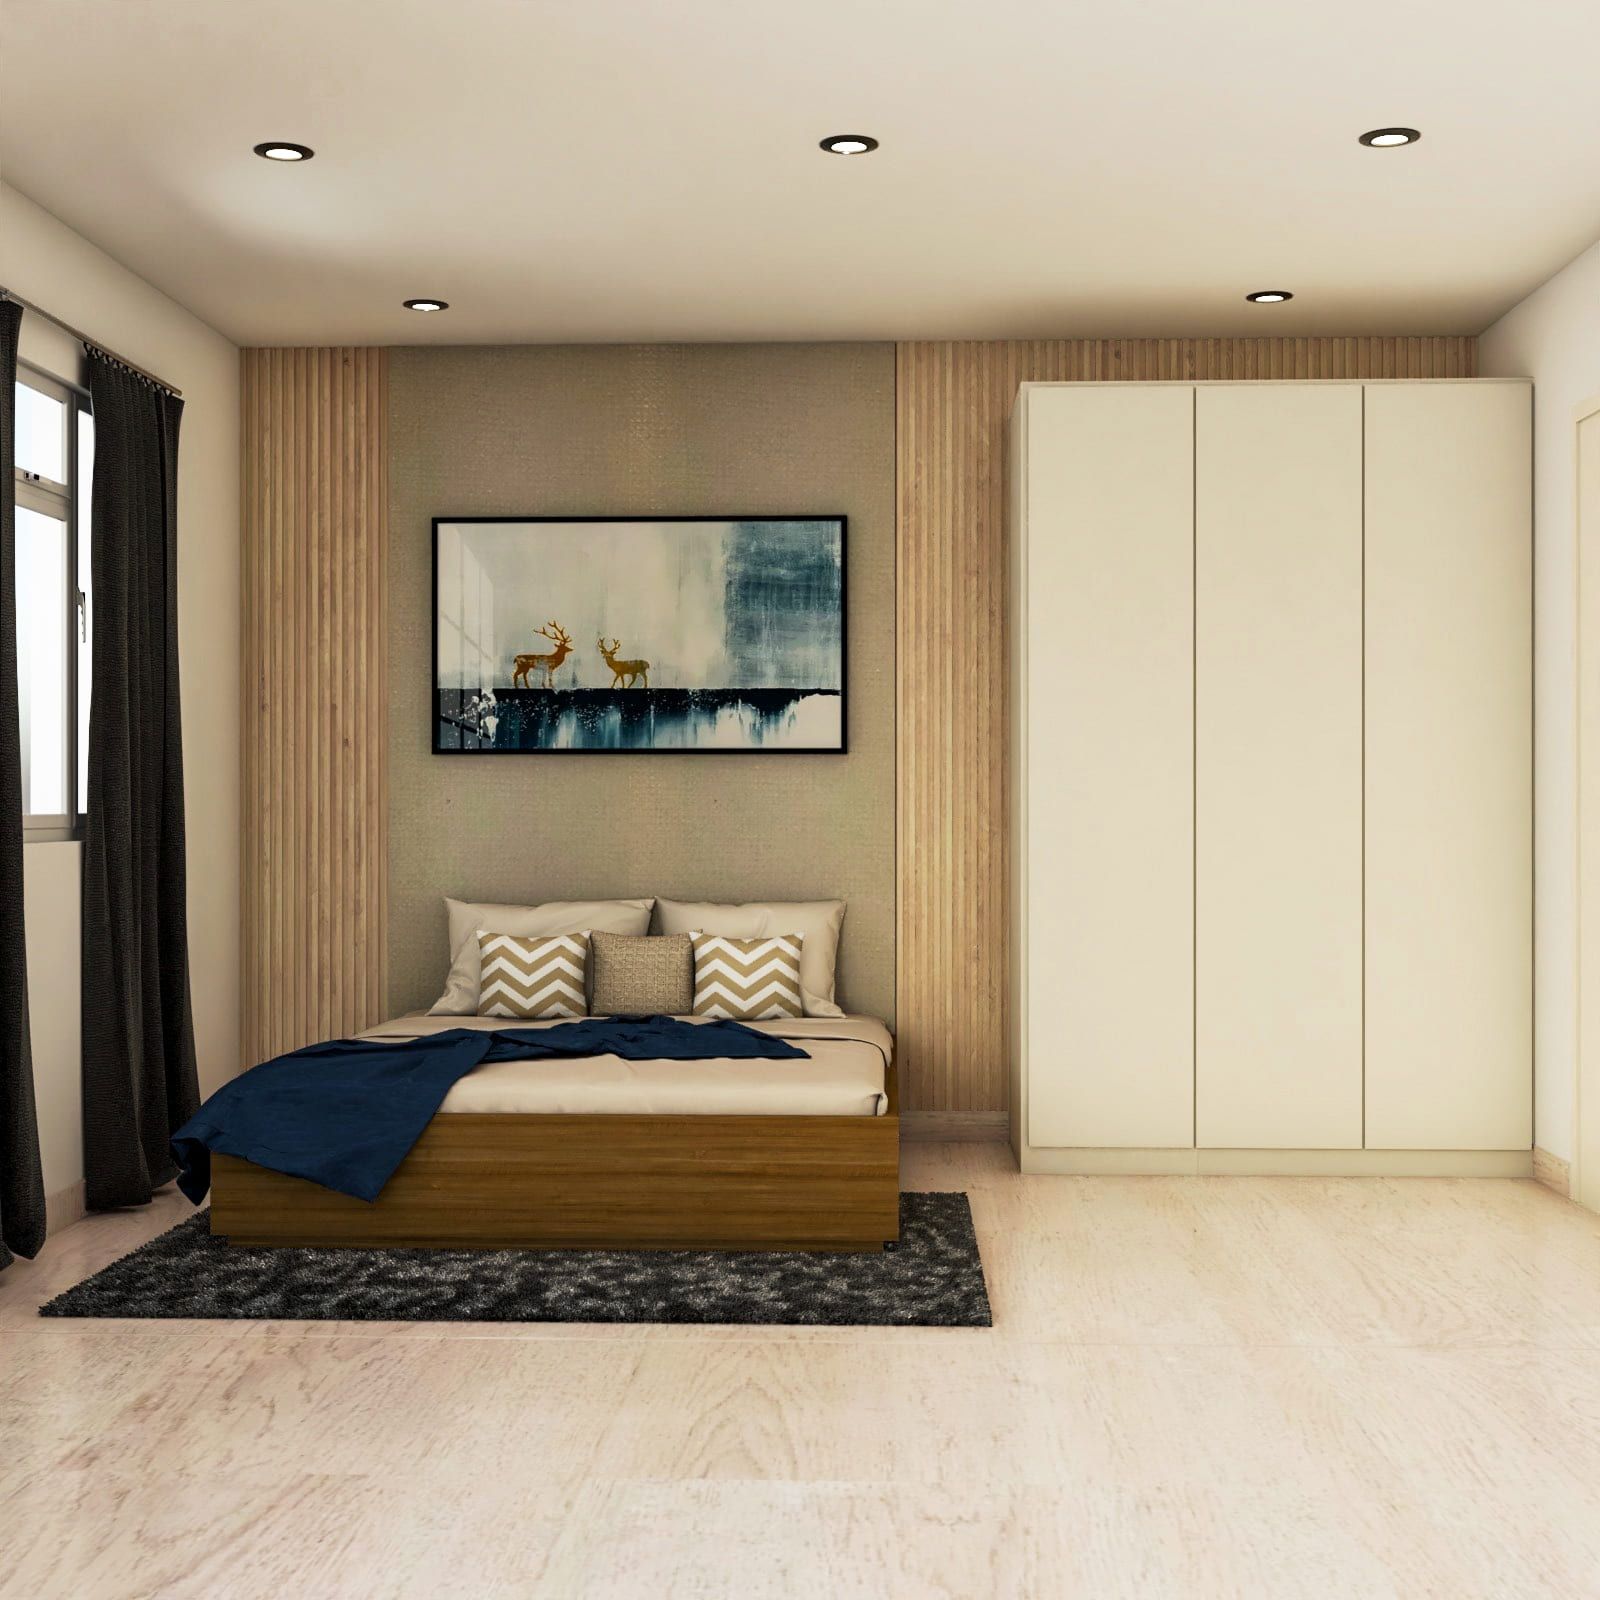 Spacious Master Bedroom Design With Warm Tones